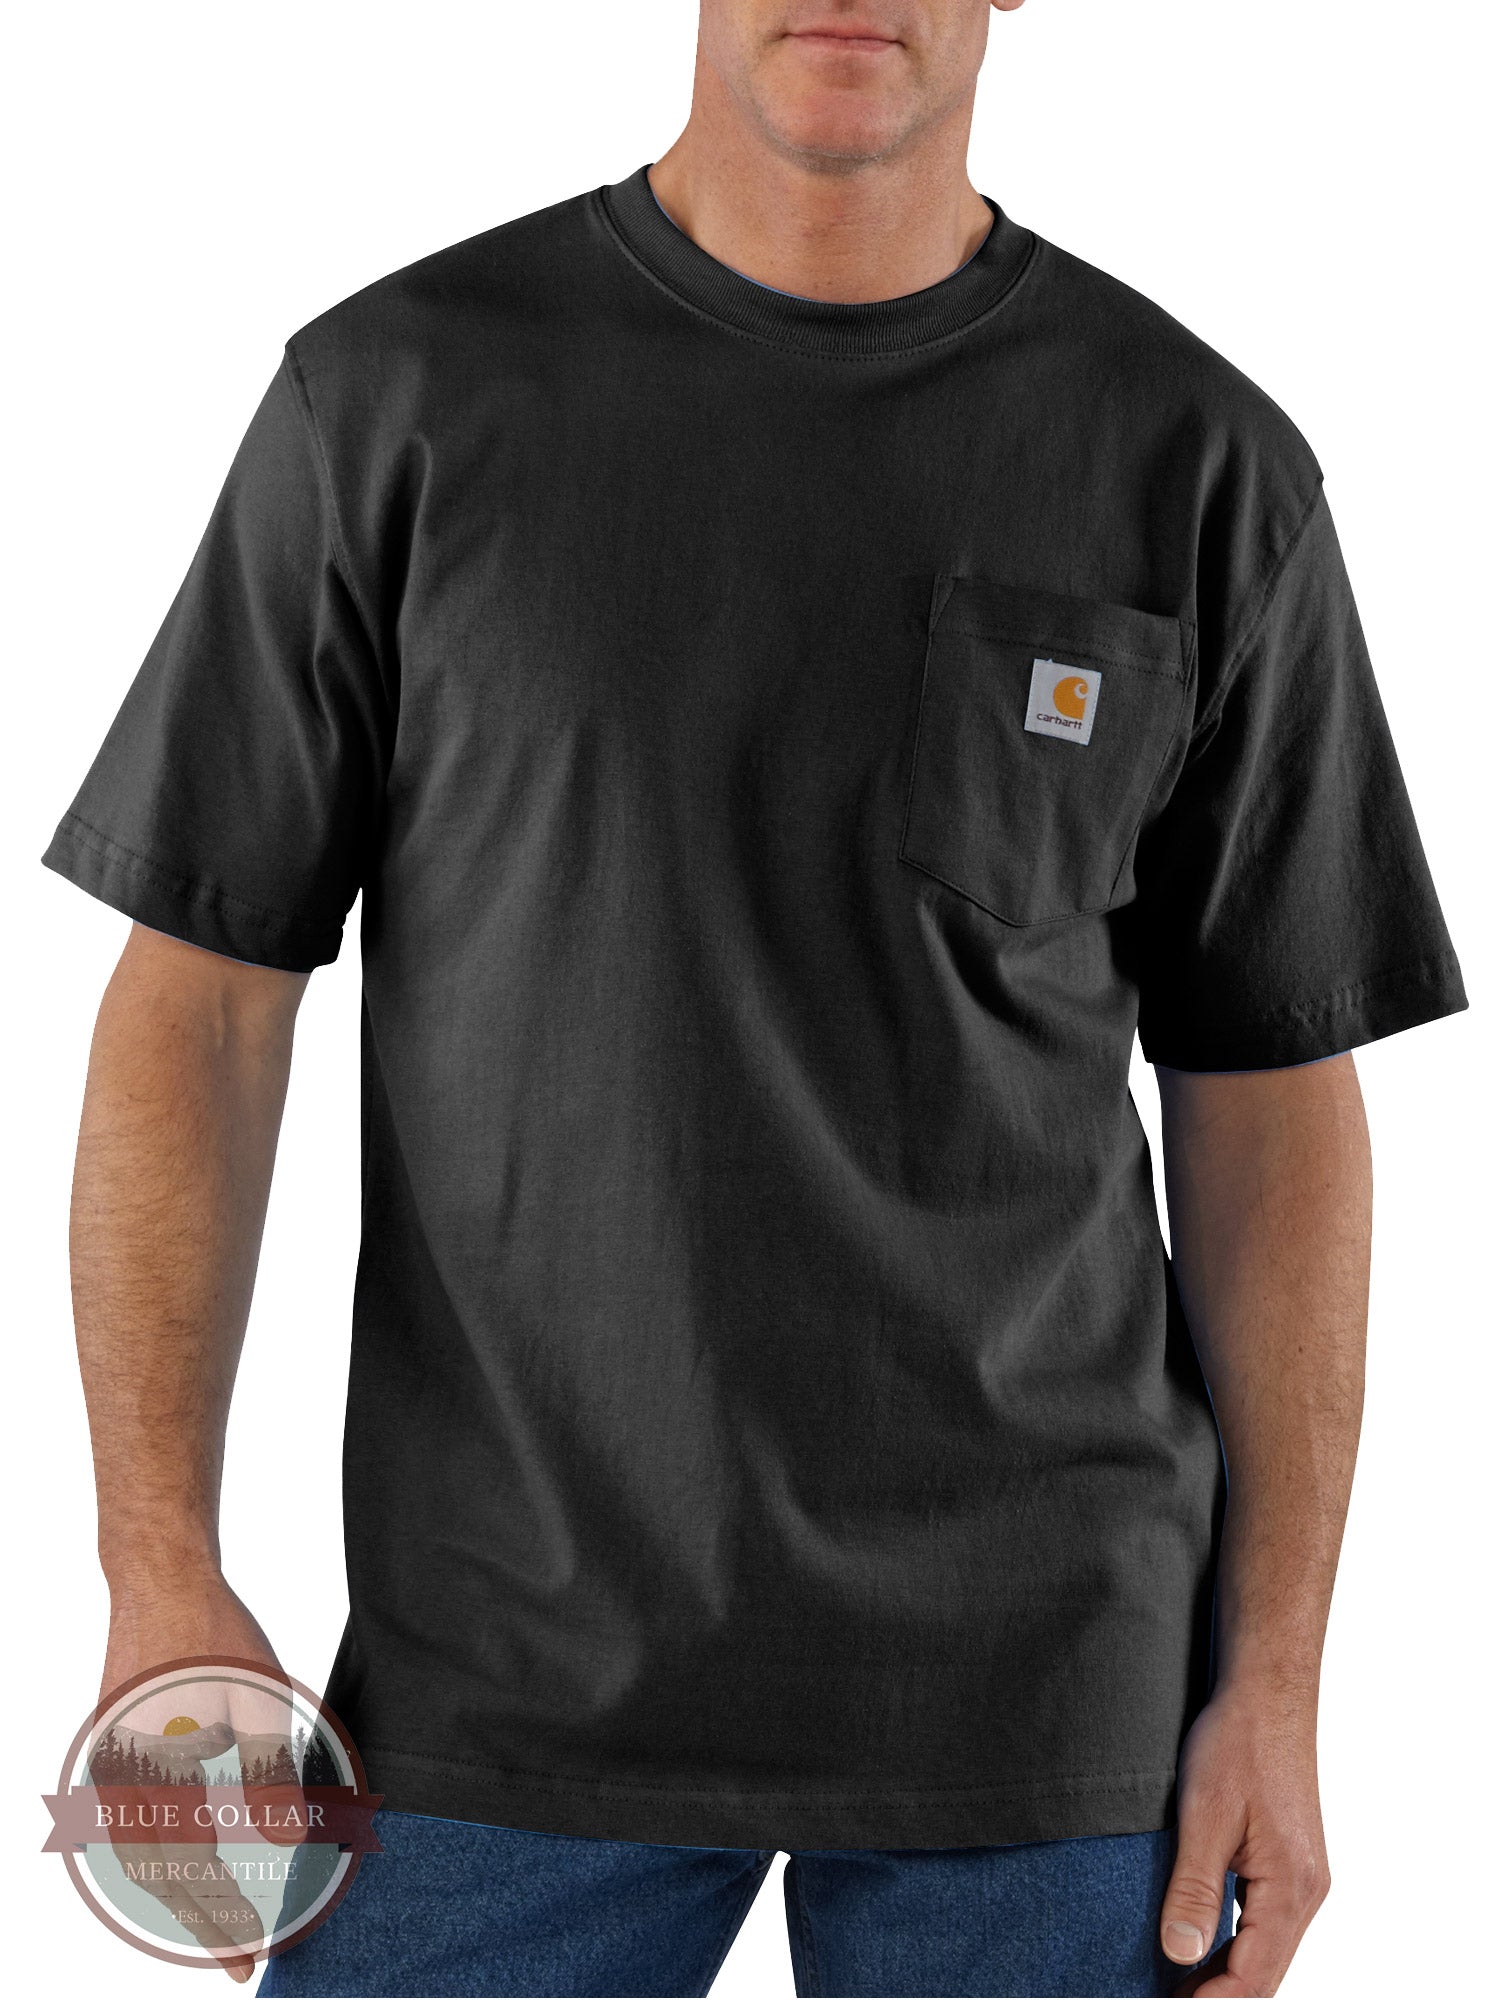 Carhartt K87 Loose Fit Heavyweight Short Sleeve Pocket T-Shirt Basic Colors Black Front View